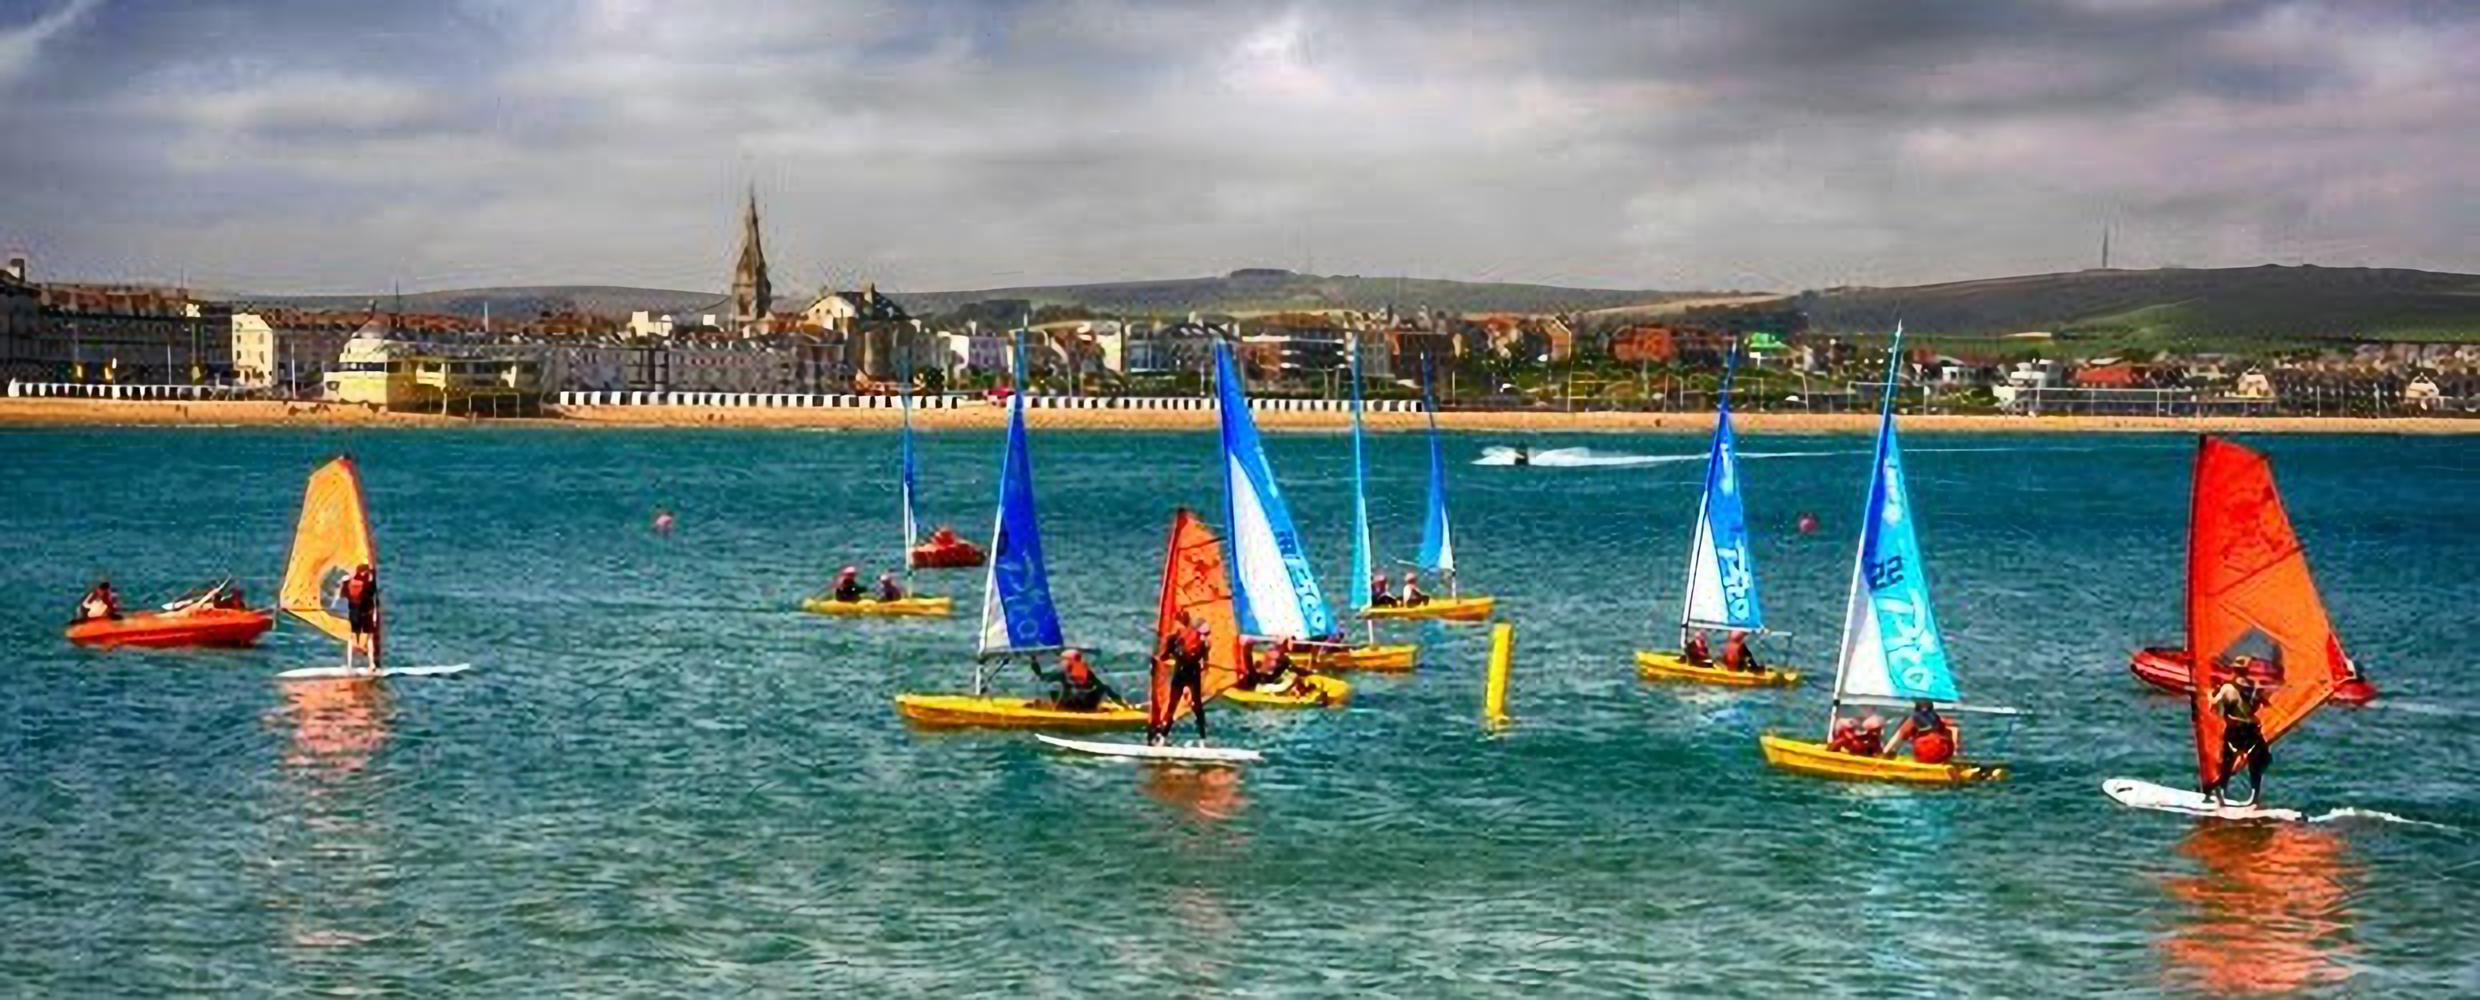 paddleboarders in weymouth sea